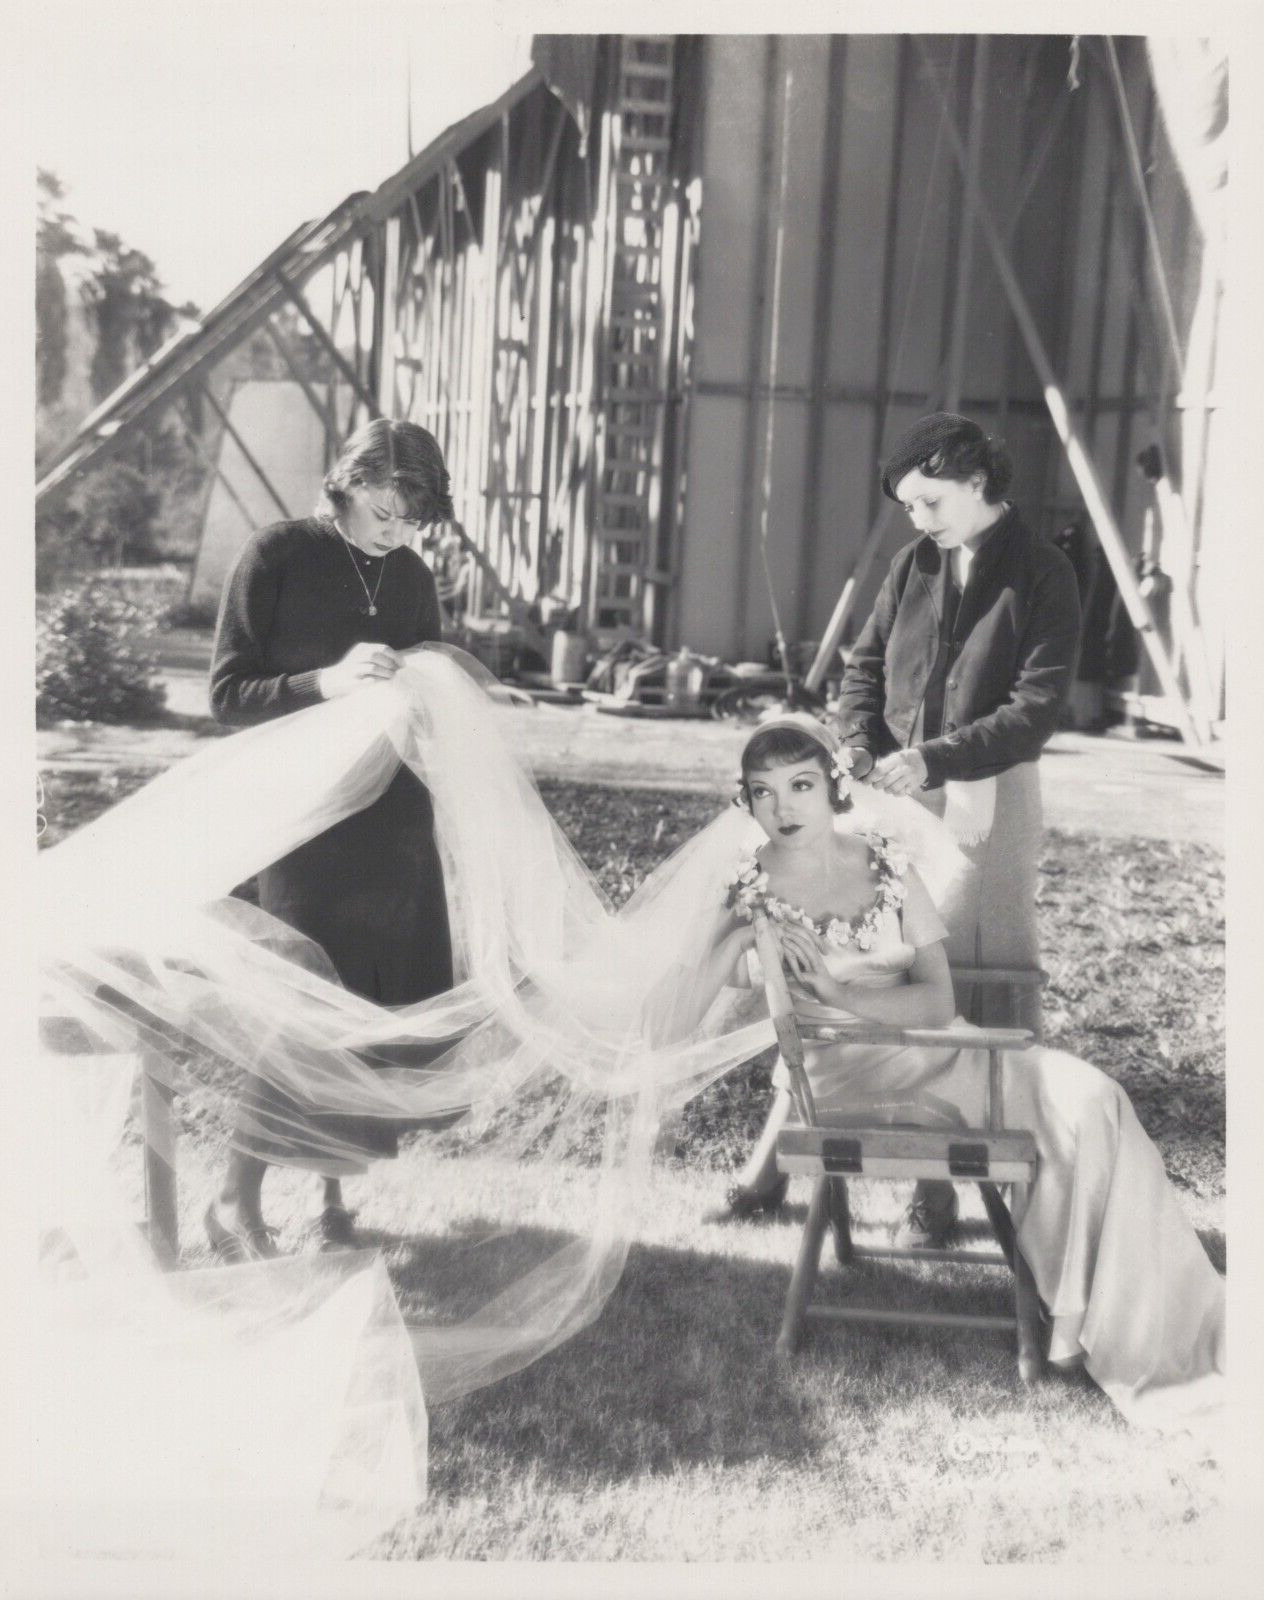 HOLLYWOOD BEAUTY CLAUDETTE COLBERT in BEHIND SCENES PORTRAIT 1970s Photo C41